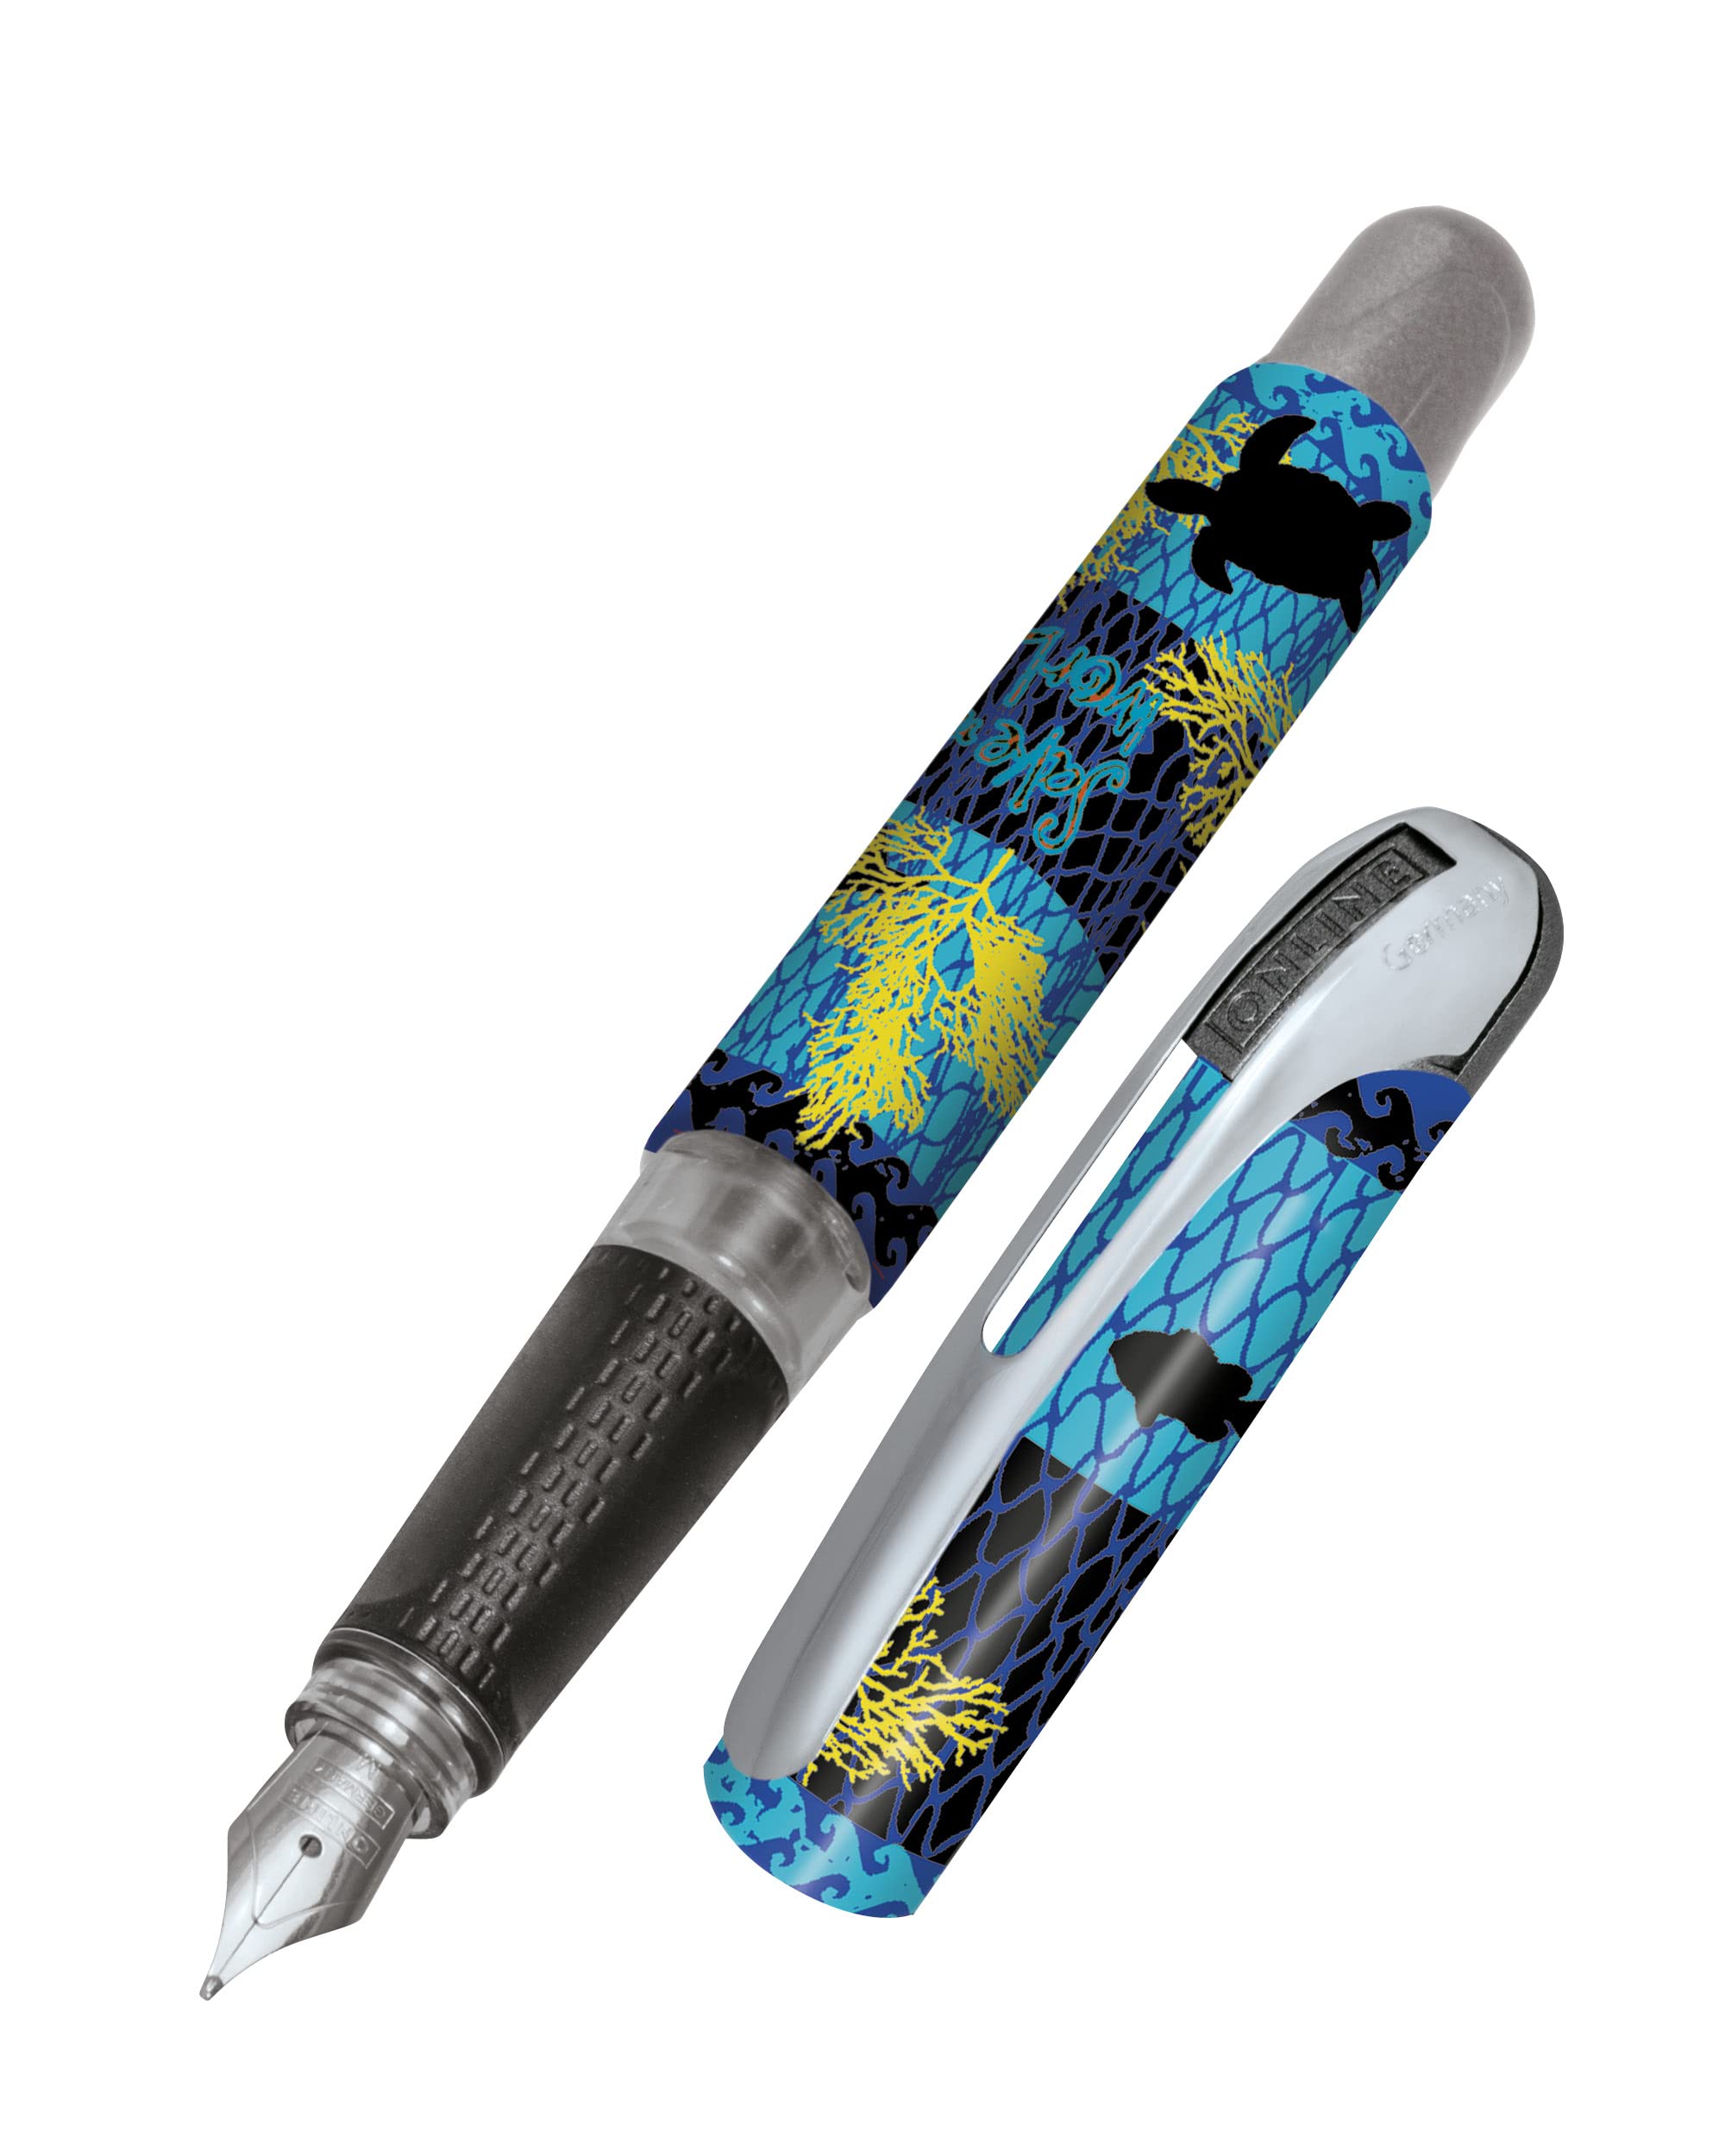 Online College ink pen Ocean ergonomic fountain pen for school/college solid medium nib, soft grip part for standard ink cartrid